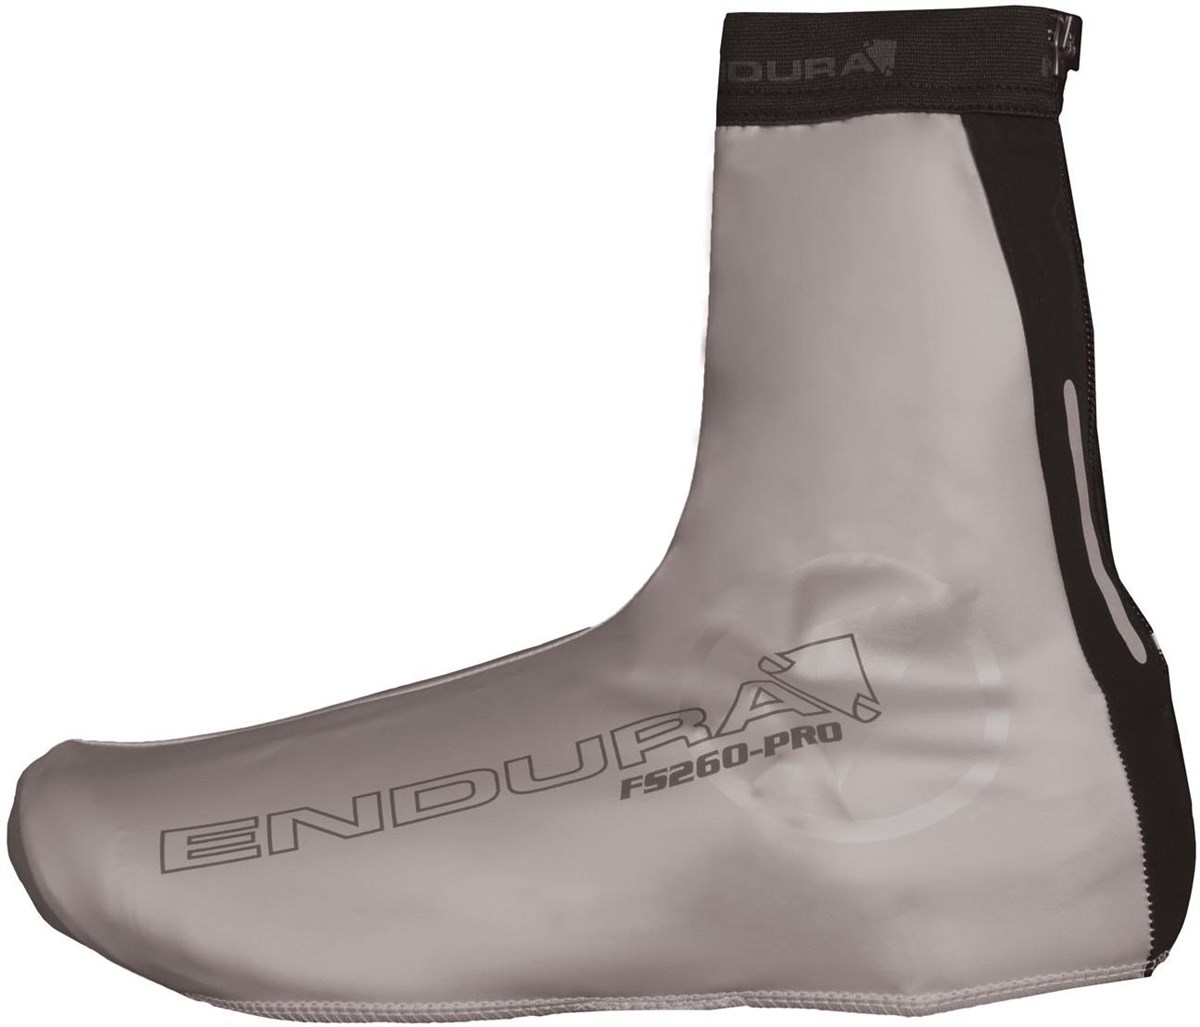 Endura FS260 Pro Slick Cycling Overshoes product image